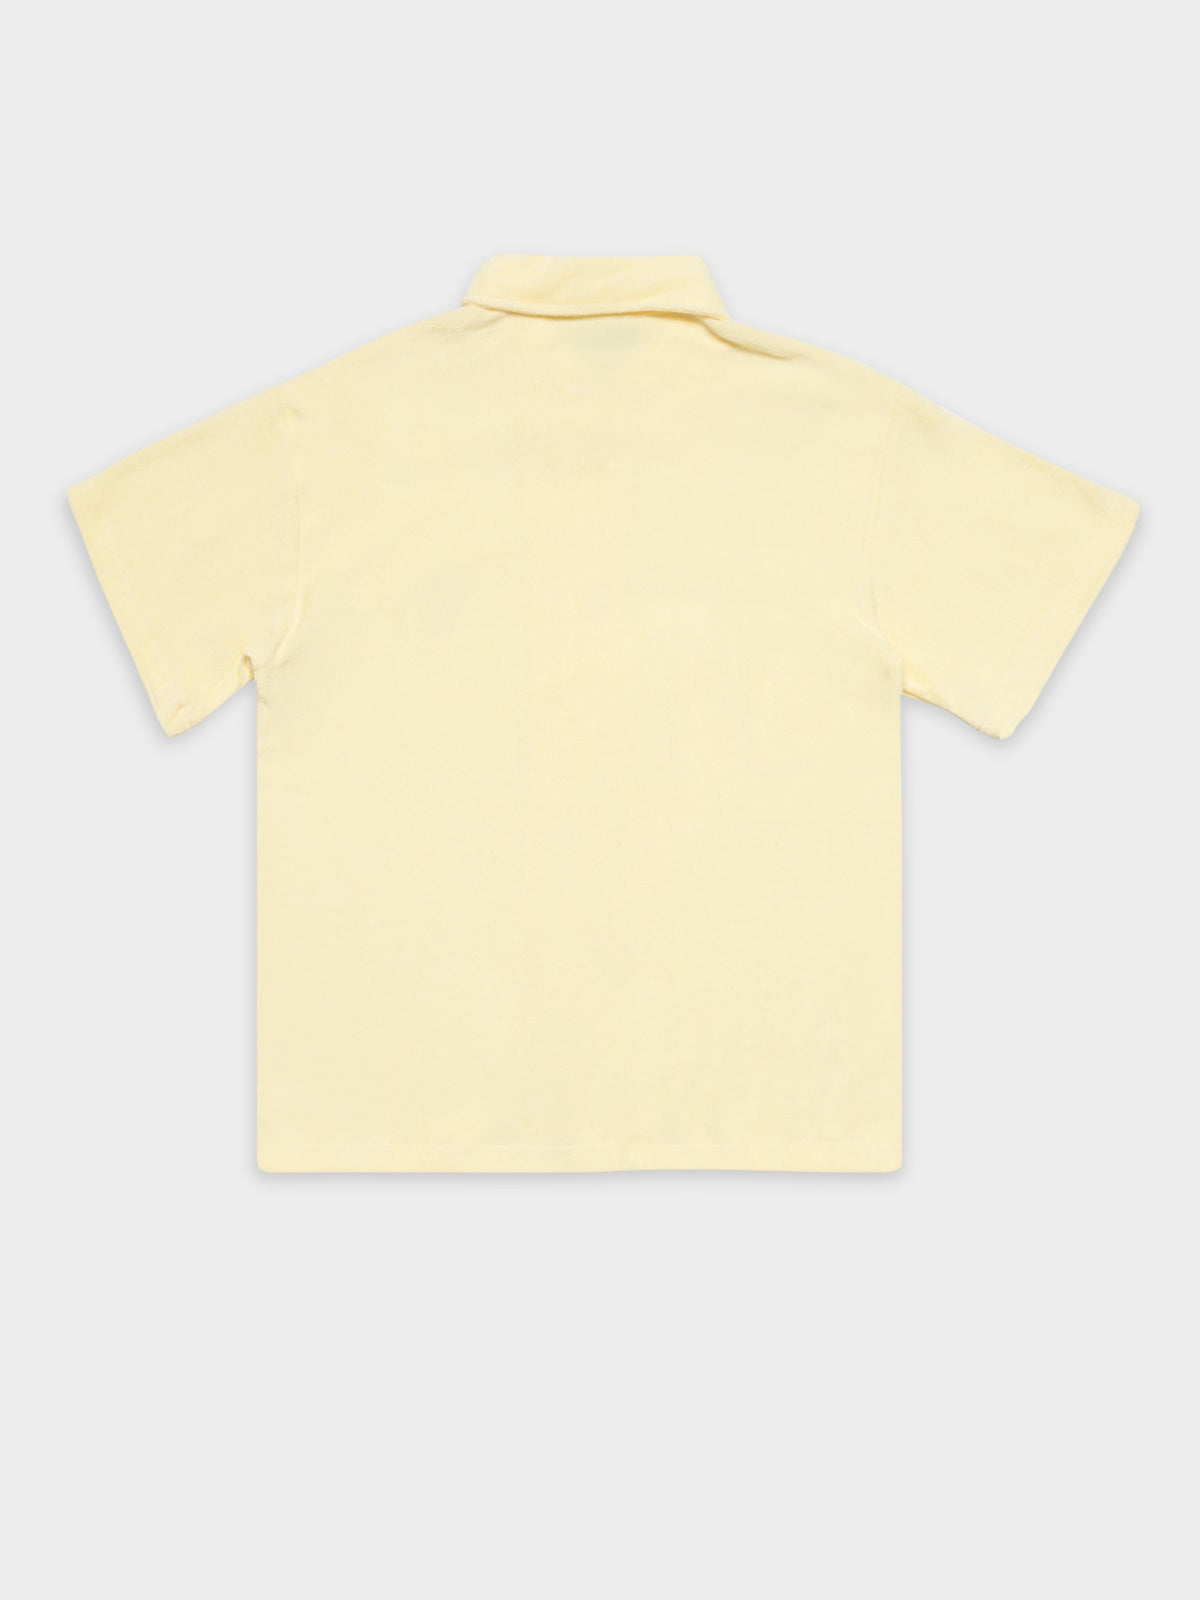 Copyright Looped Terry Shirt in Lemon